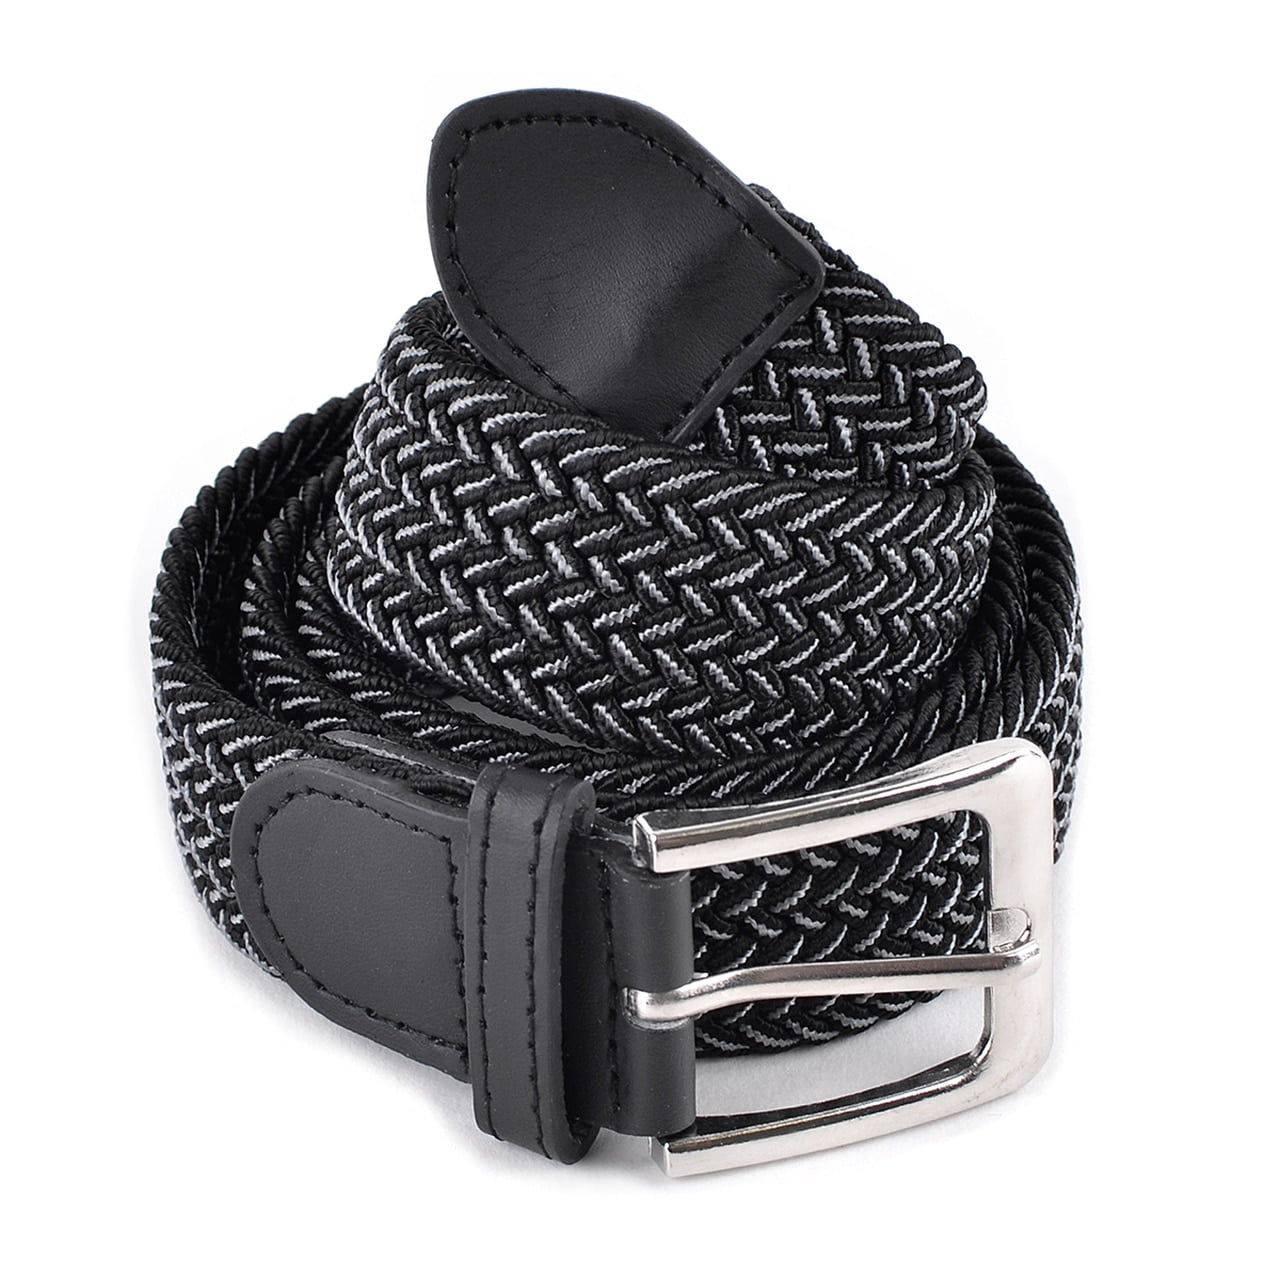 Unisex Golf Belts - Stretchy Belts for Men and Women - Walmart.com